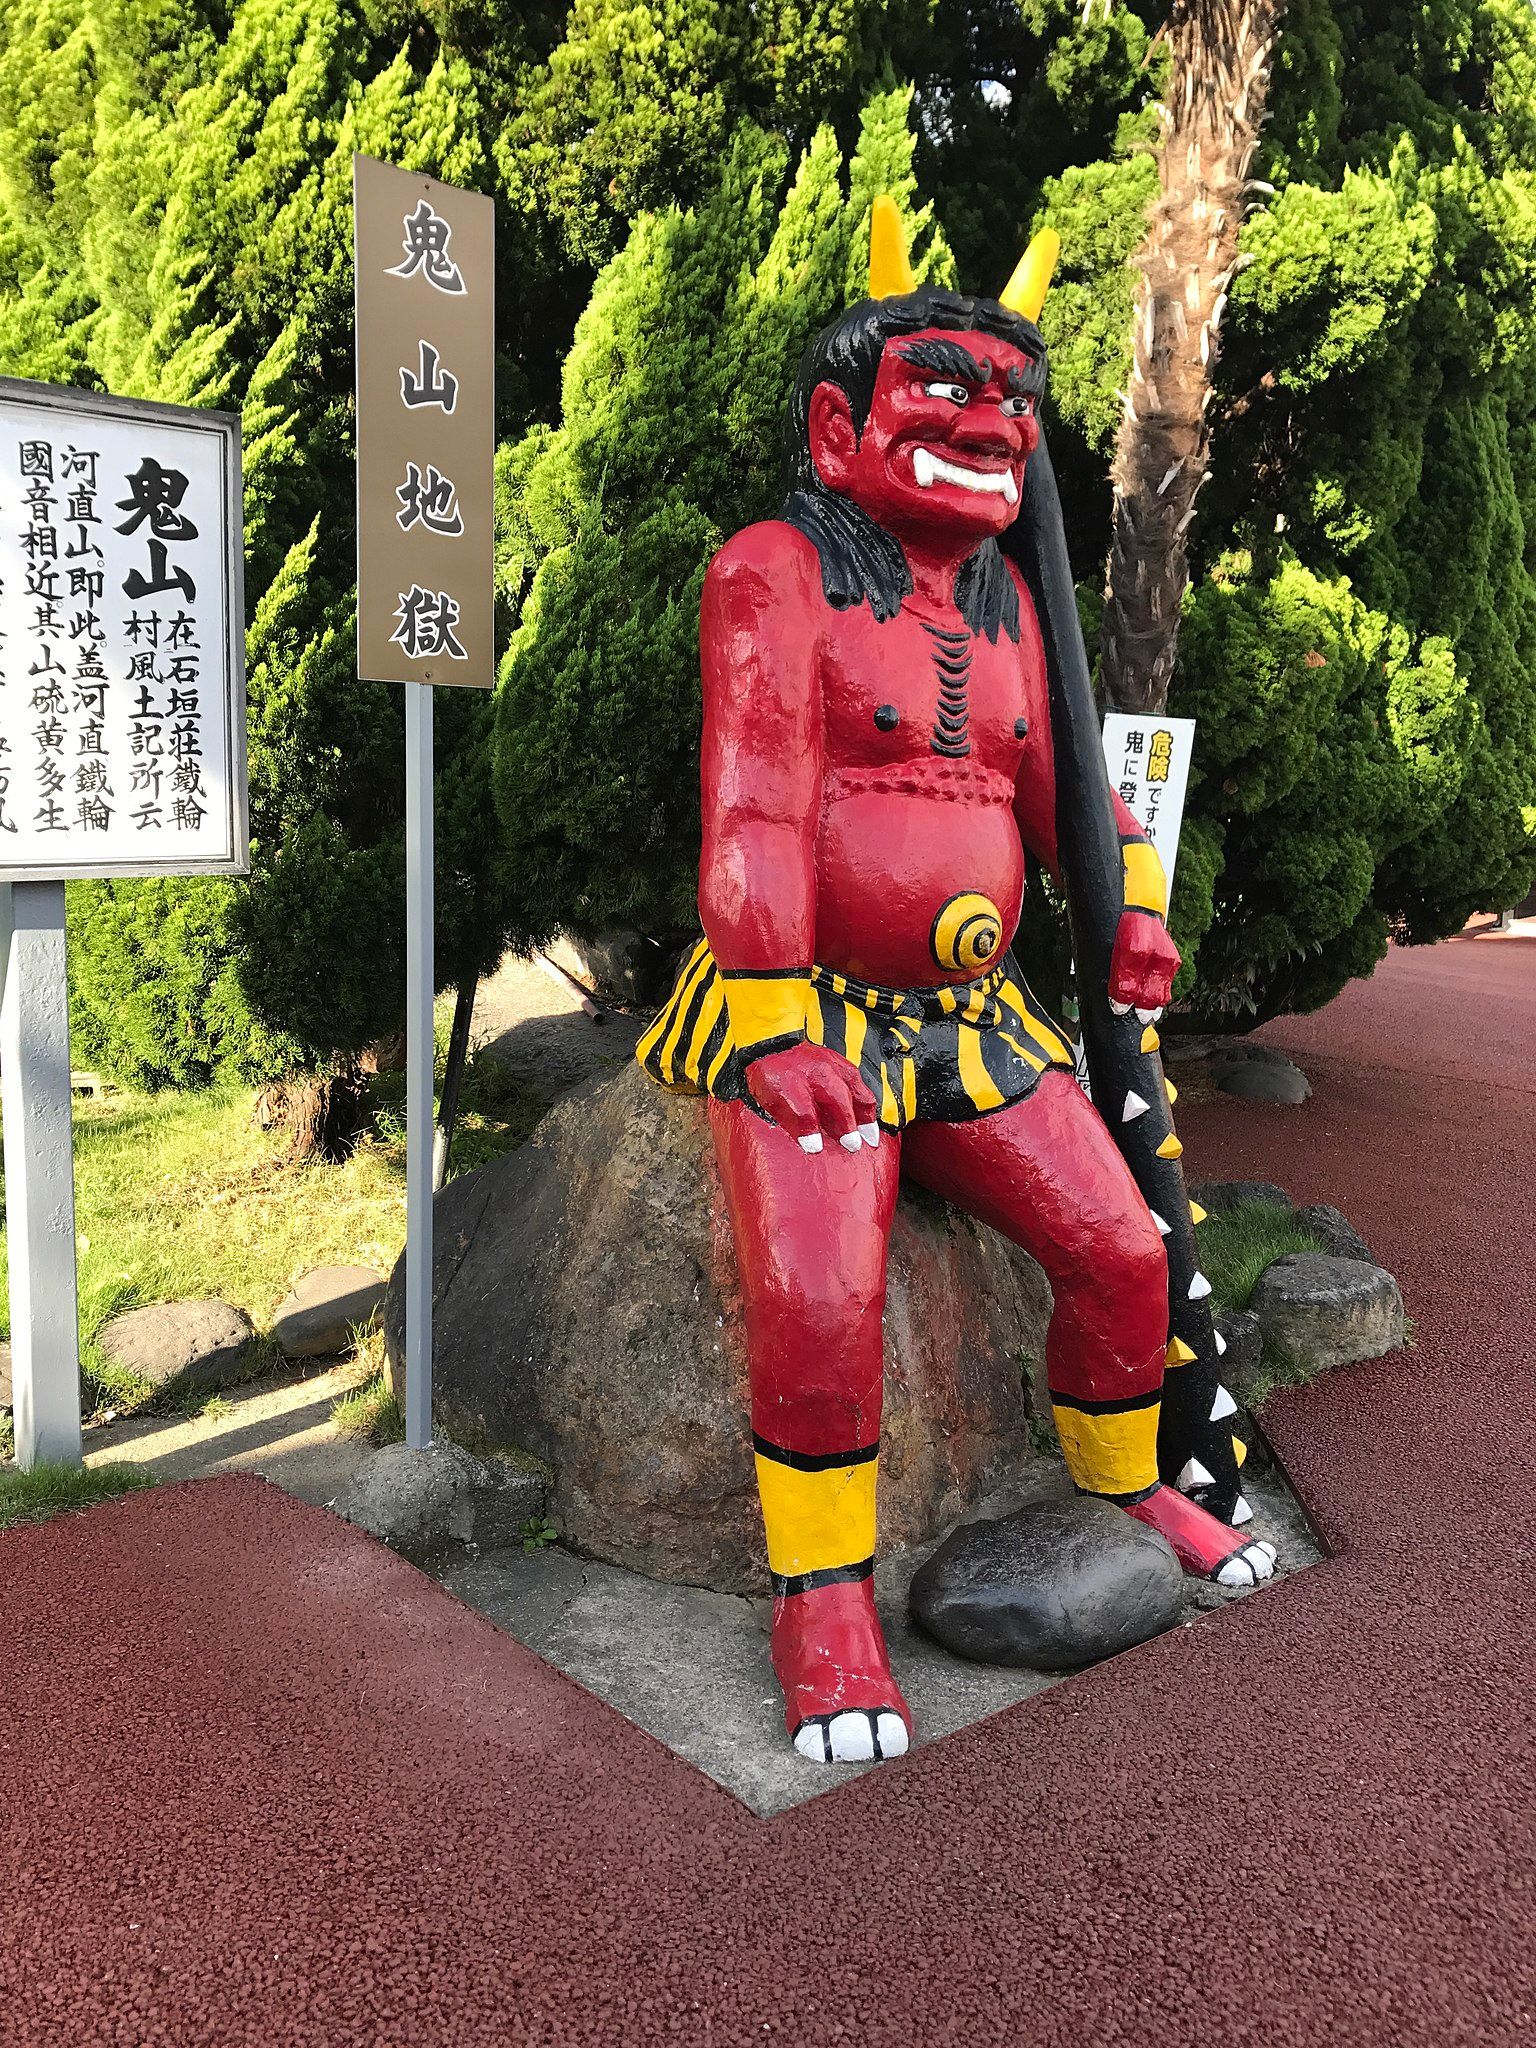 A peek into Japan’s Hot Springs (Part 2)